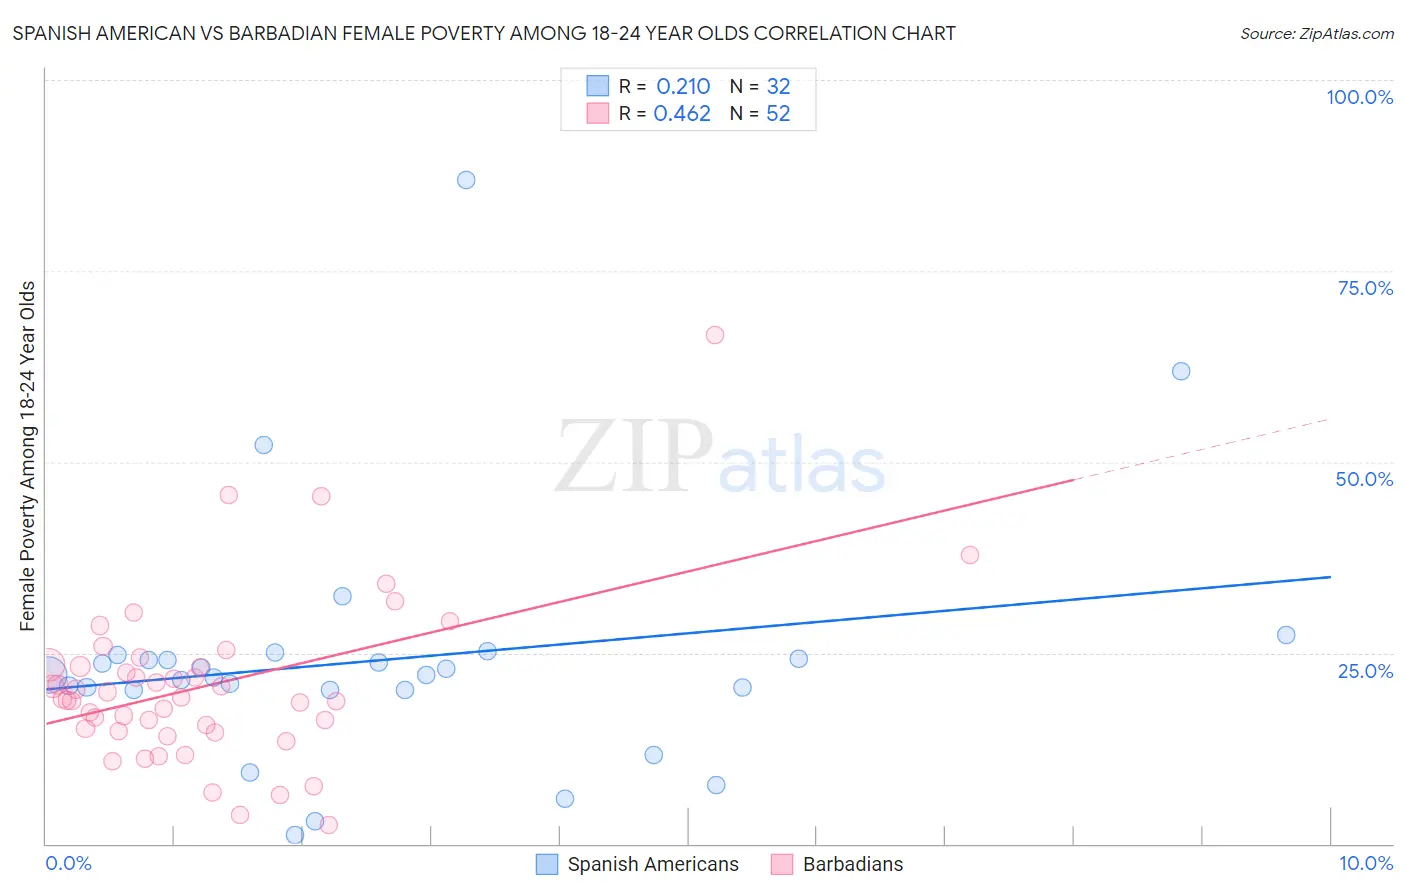 Spanish American vs Barbadian Female Poverty Among 18-24 Year Olds